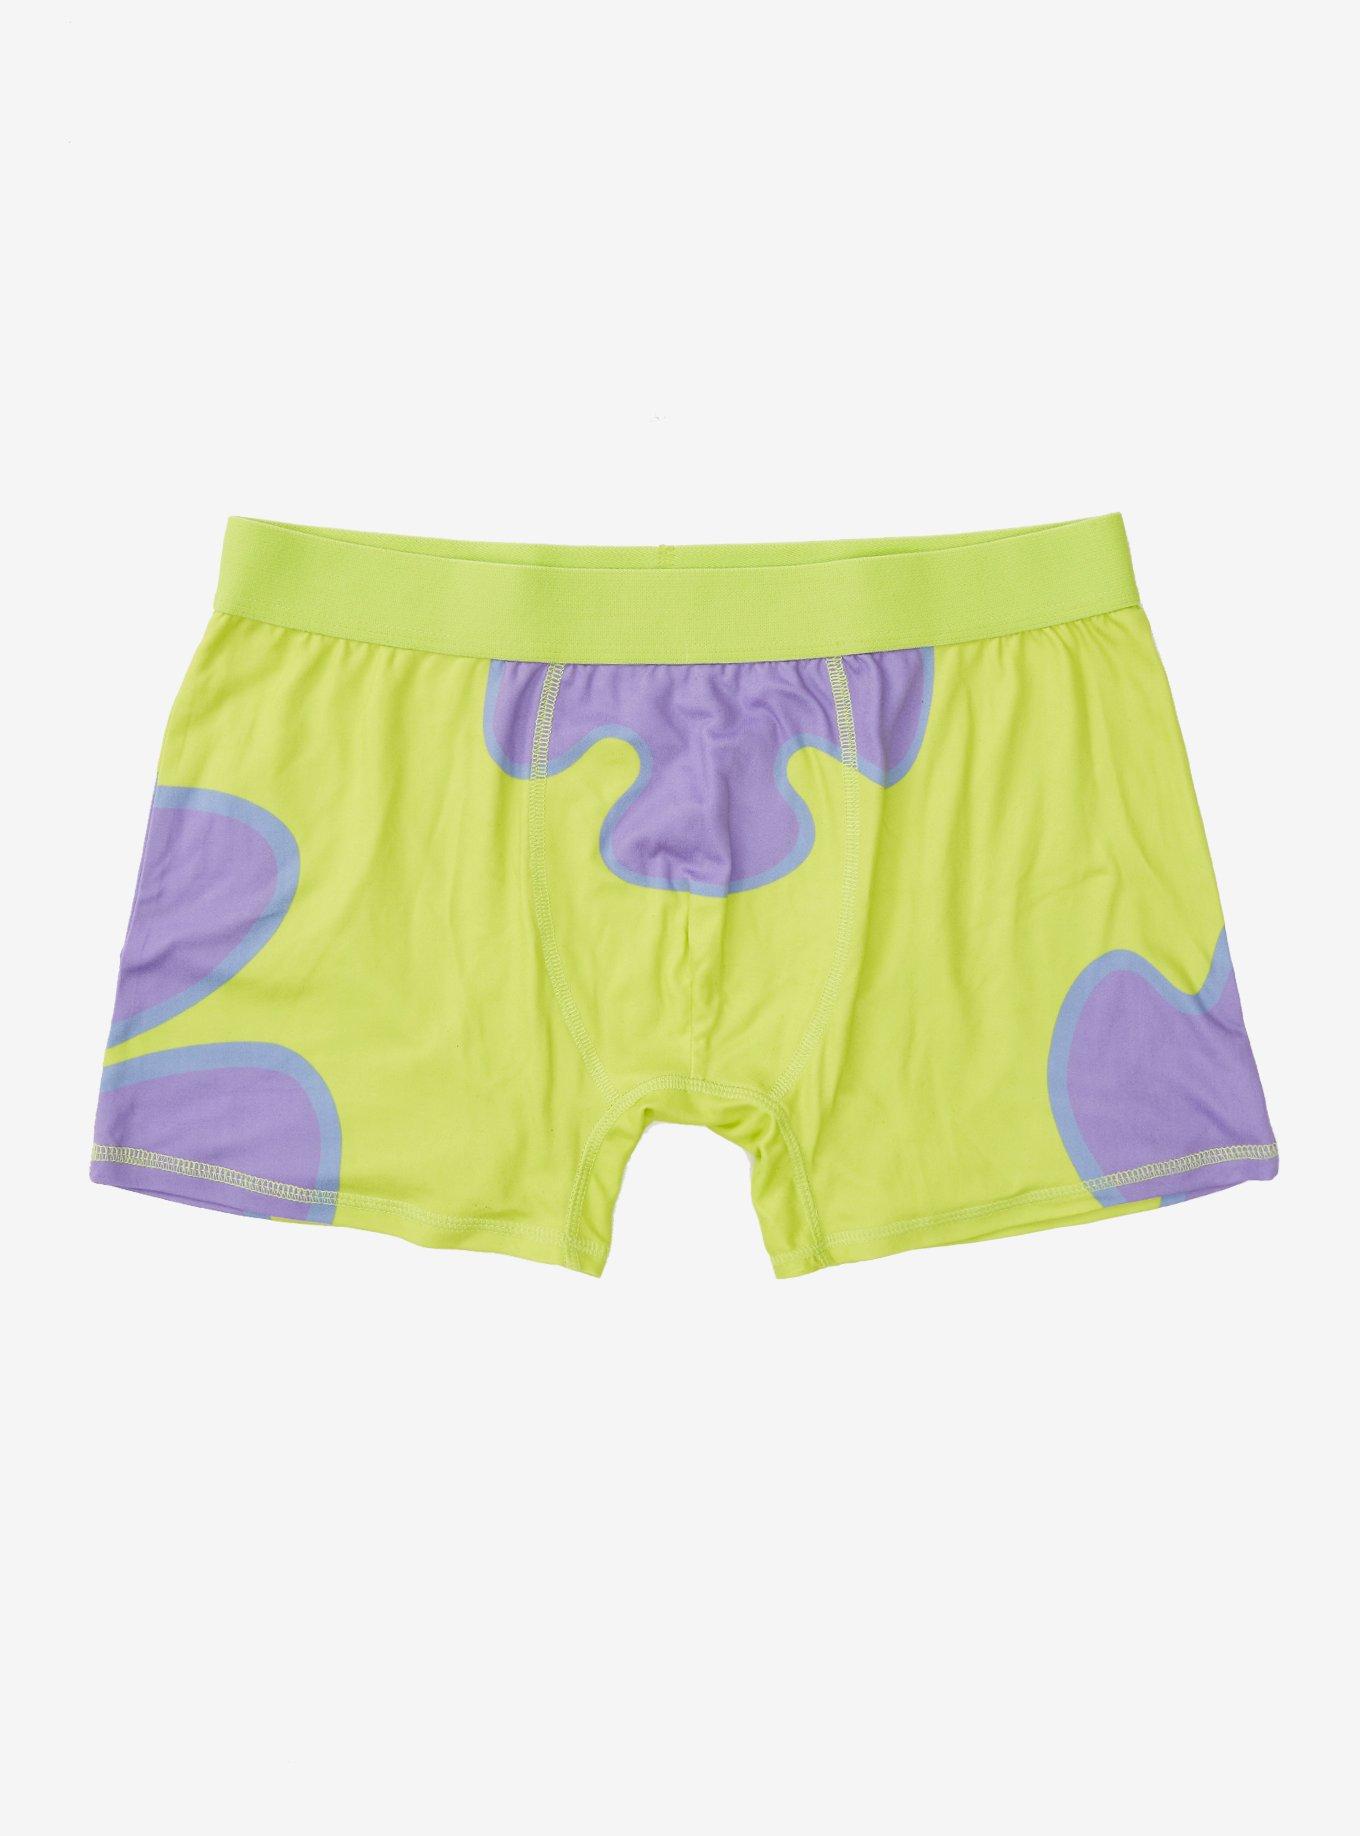 Nickelodeon SpongeBob Squarepants Pirate Underwear Women Undies